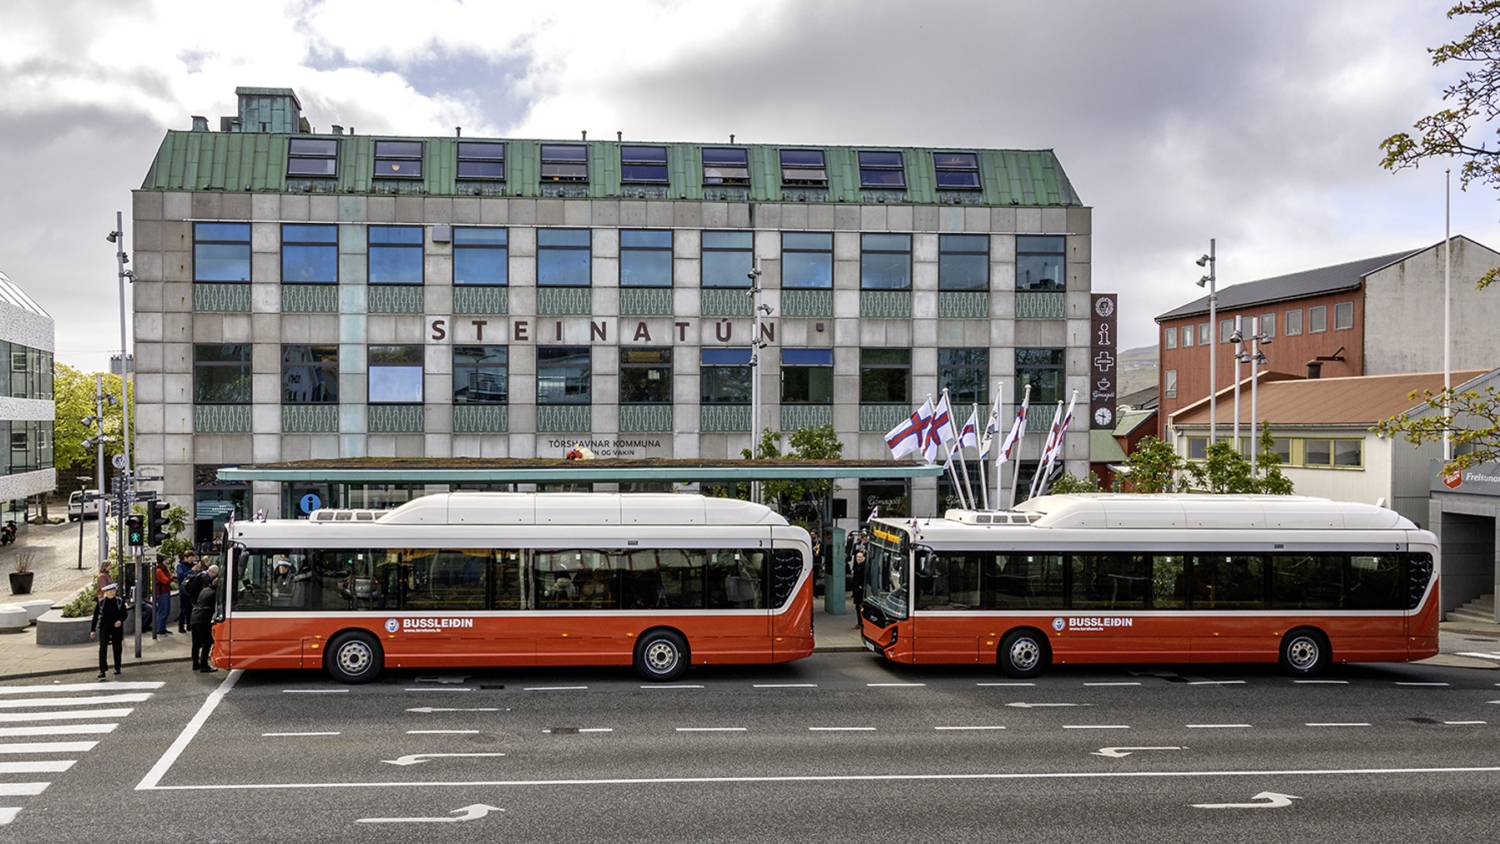 Prezentace elektrických autobusů v Tórshavnu. (zdroj: Tórshavnar kommuna)